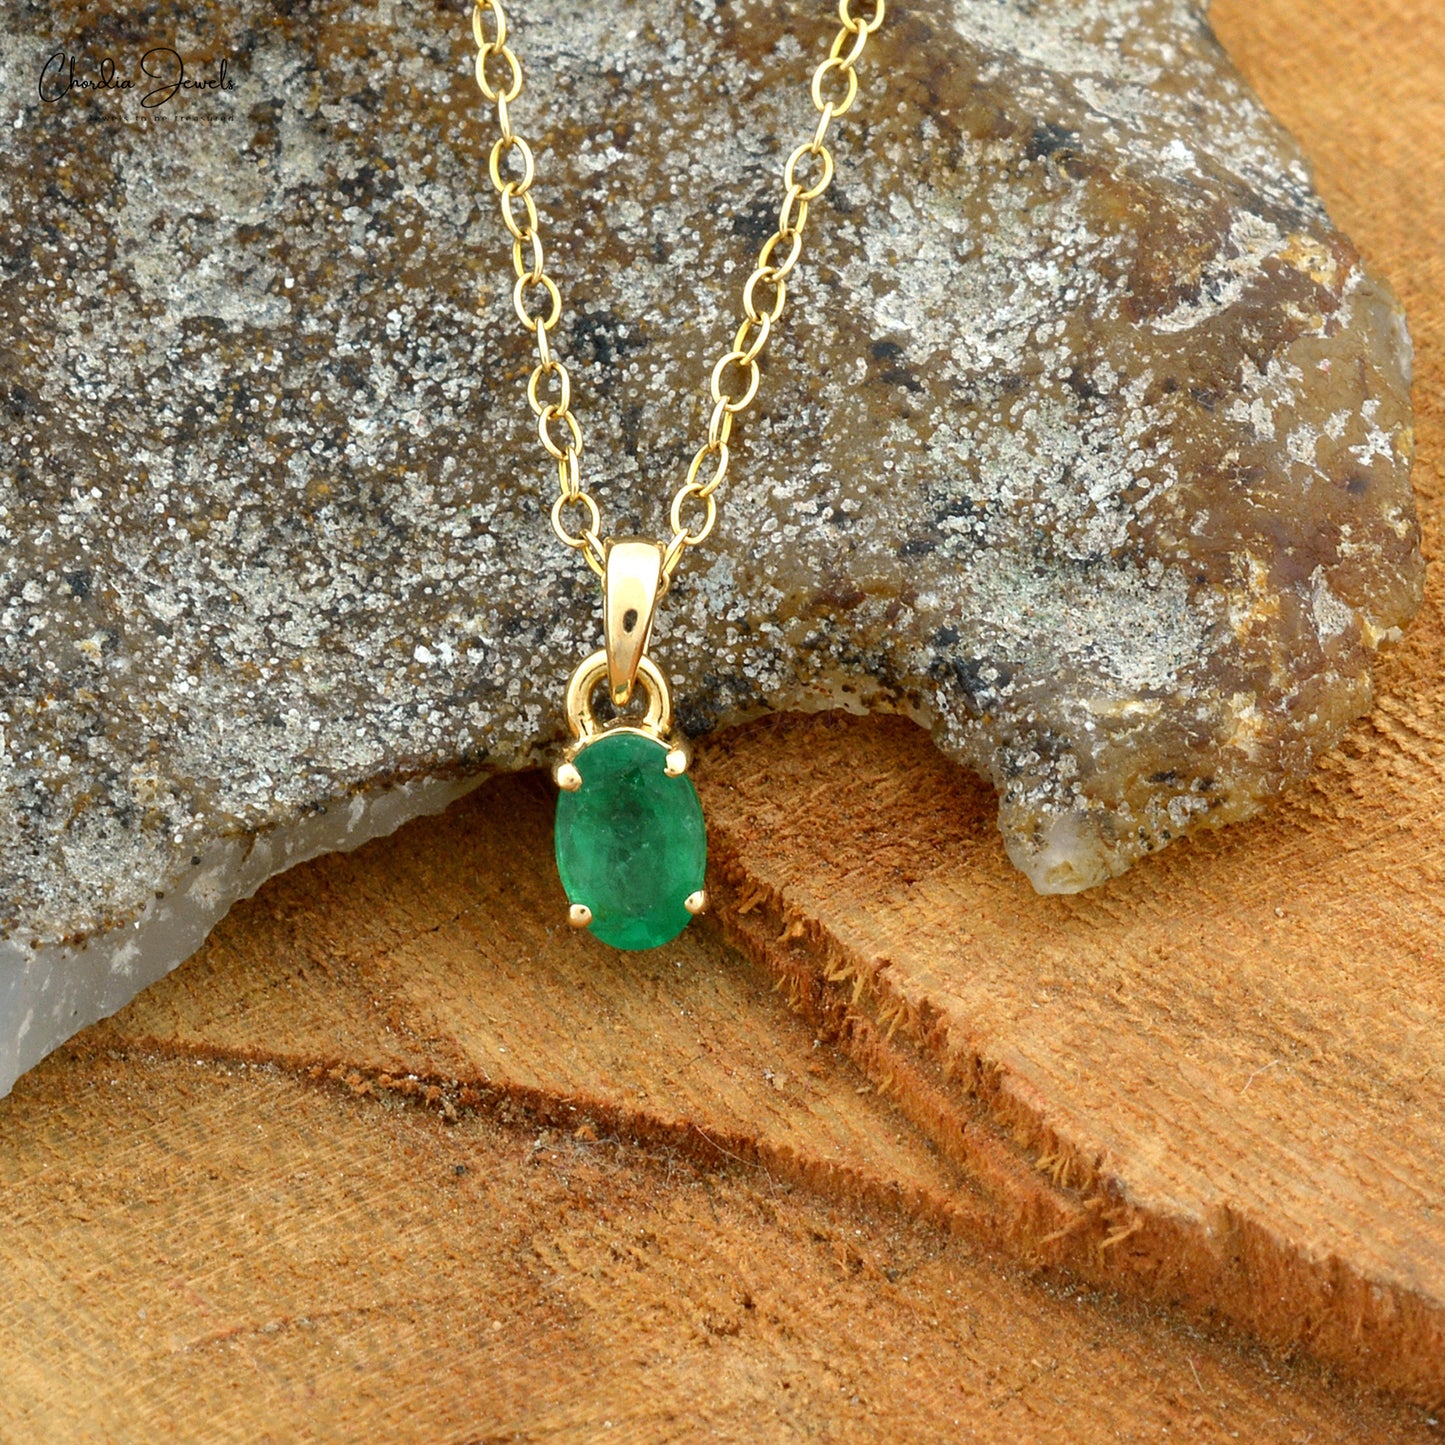 Solitaire Pendant In 14k Yellow Gold Genuine 0.41ct Emerald Single Stone Pendant For Love